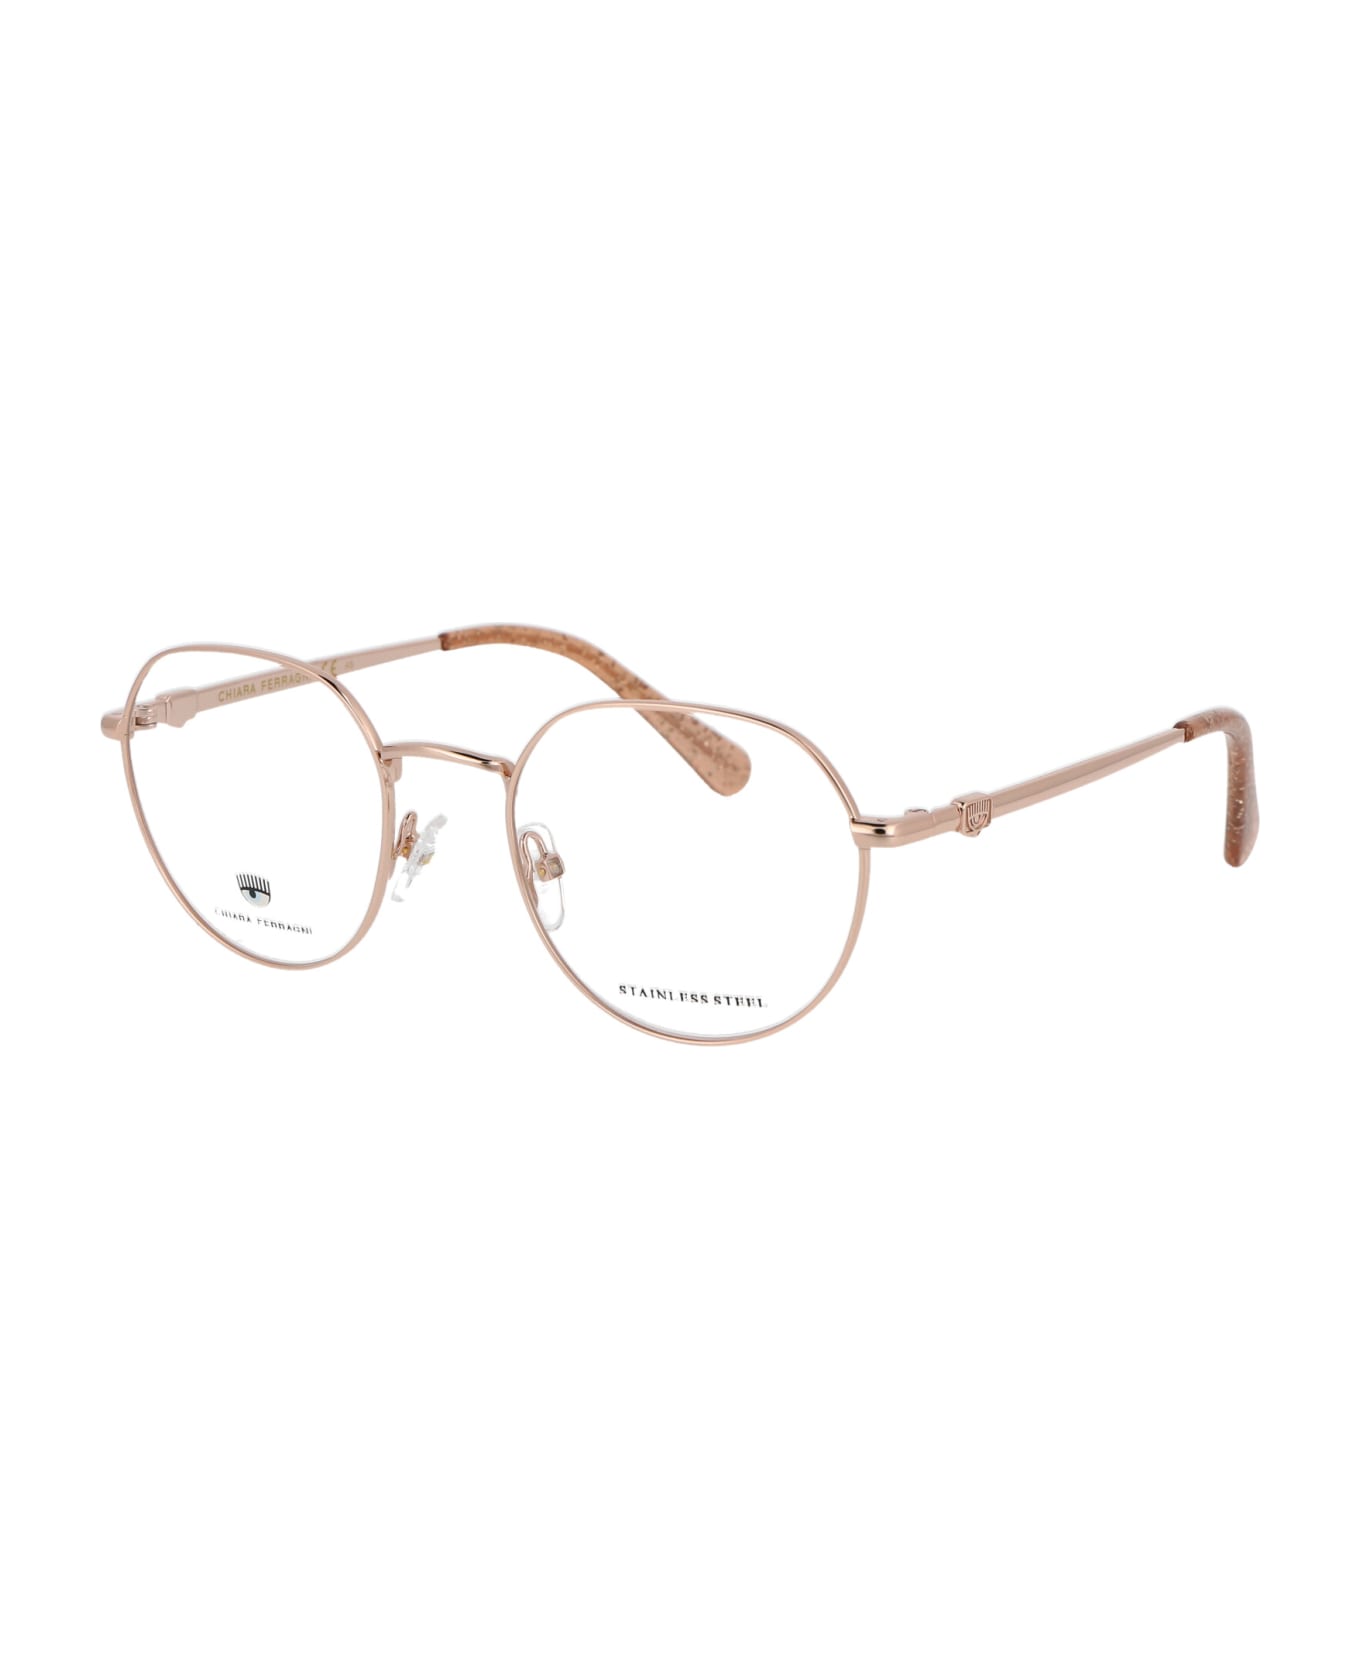 Chiara Ferragni Cf 1012 Glasses - DDB GOLD COPPER アイウェア